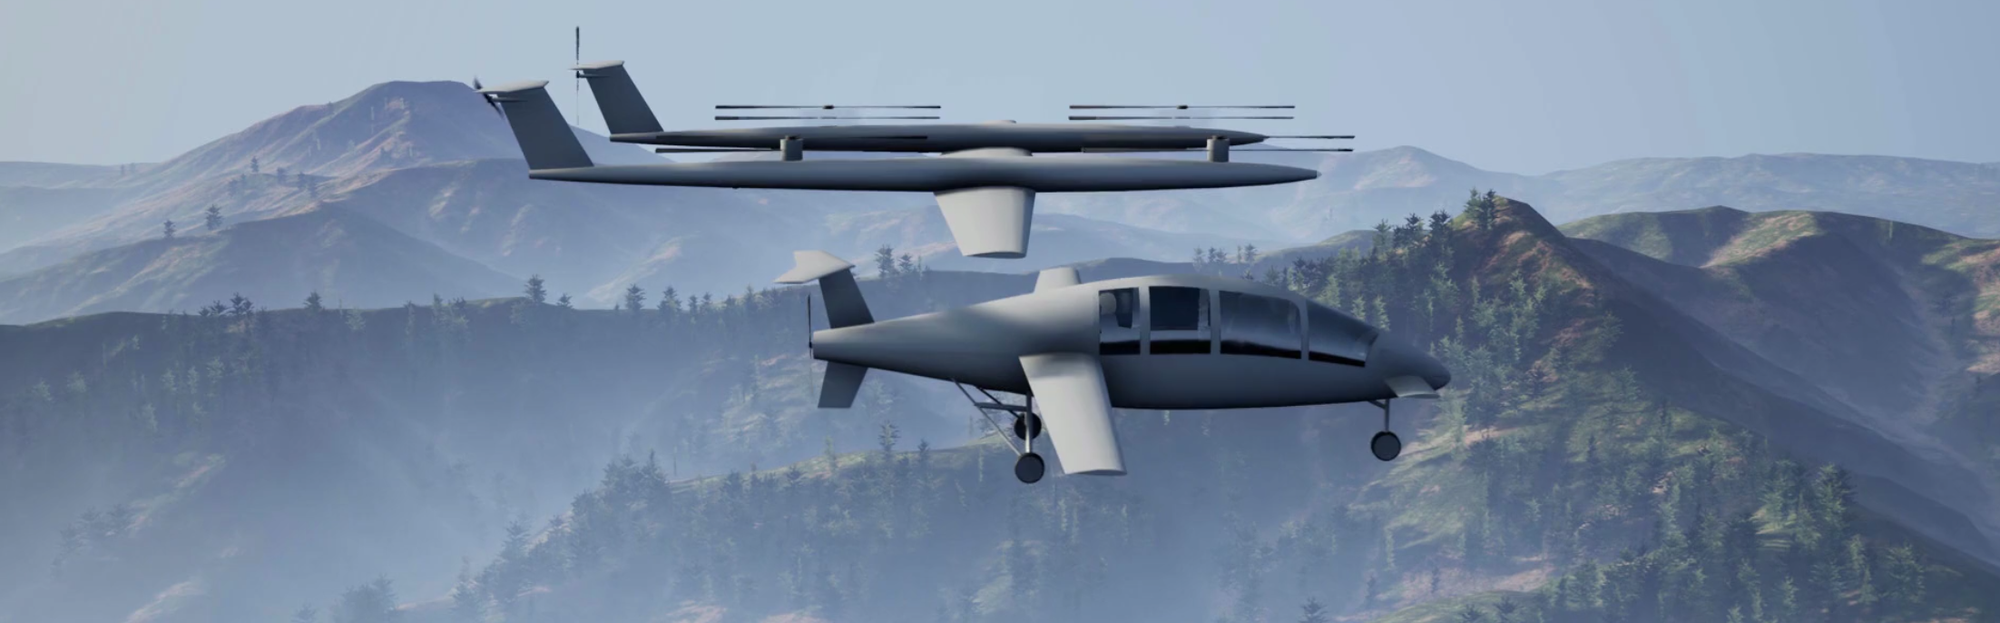 Talyn Air eVTOL prototype